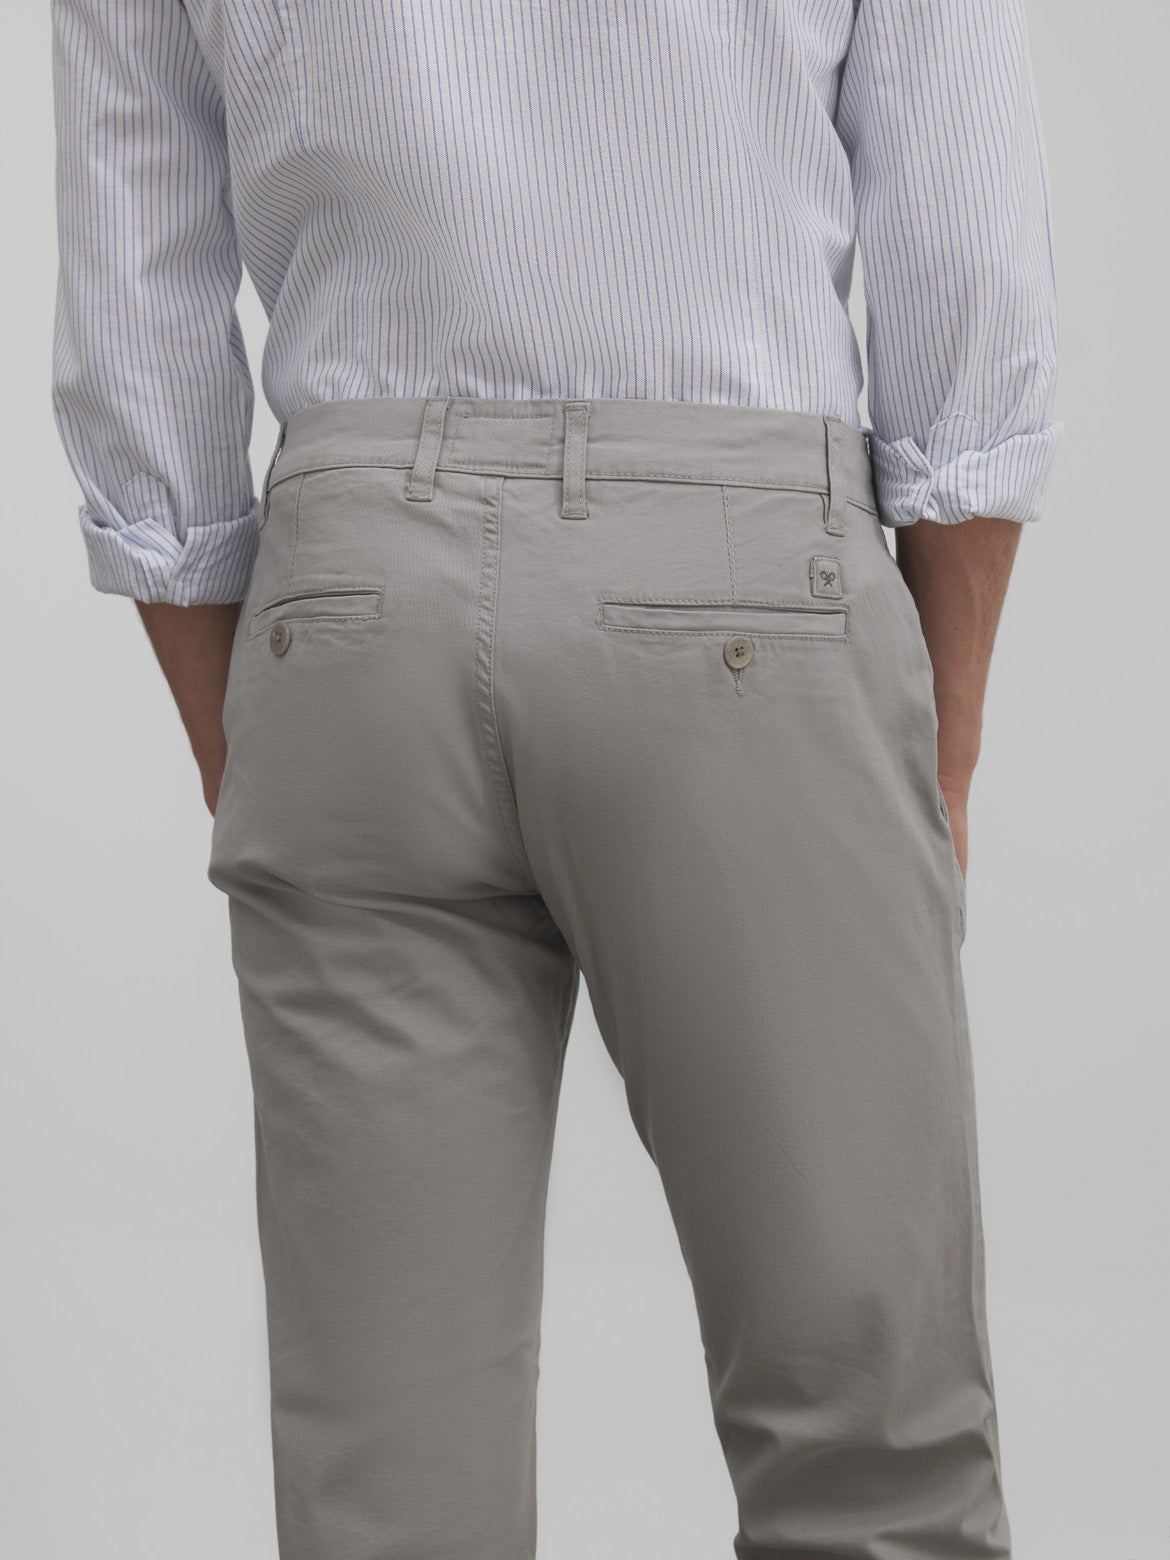 Pantalon sport chino gris